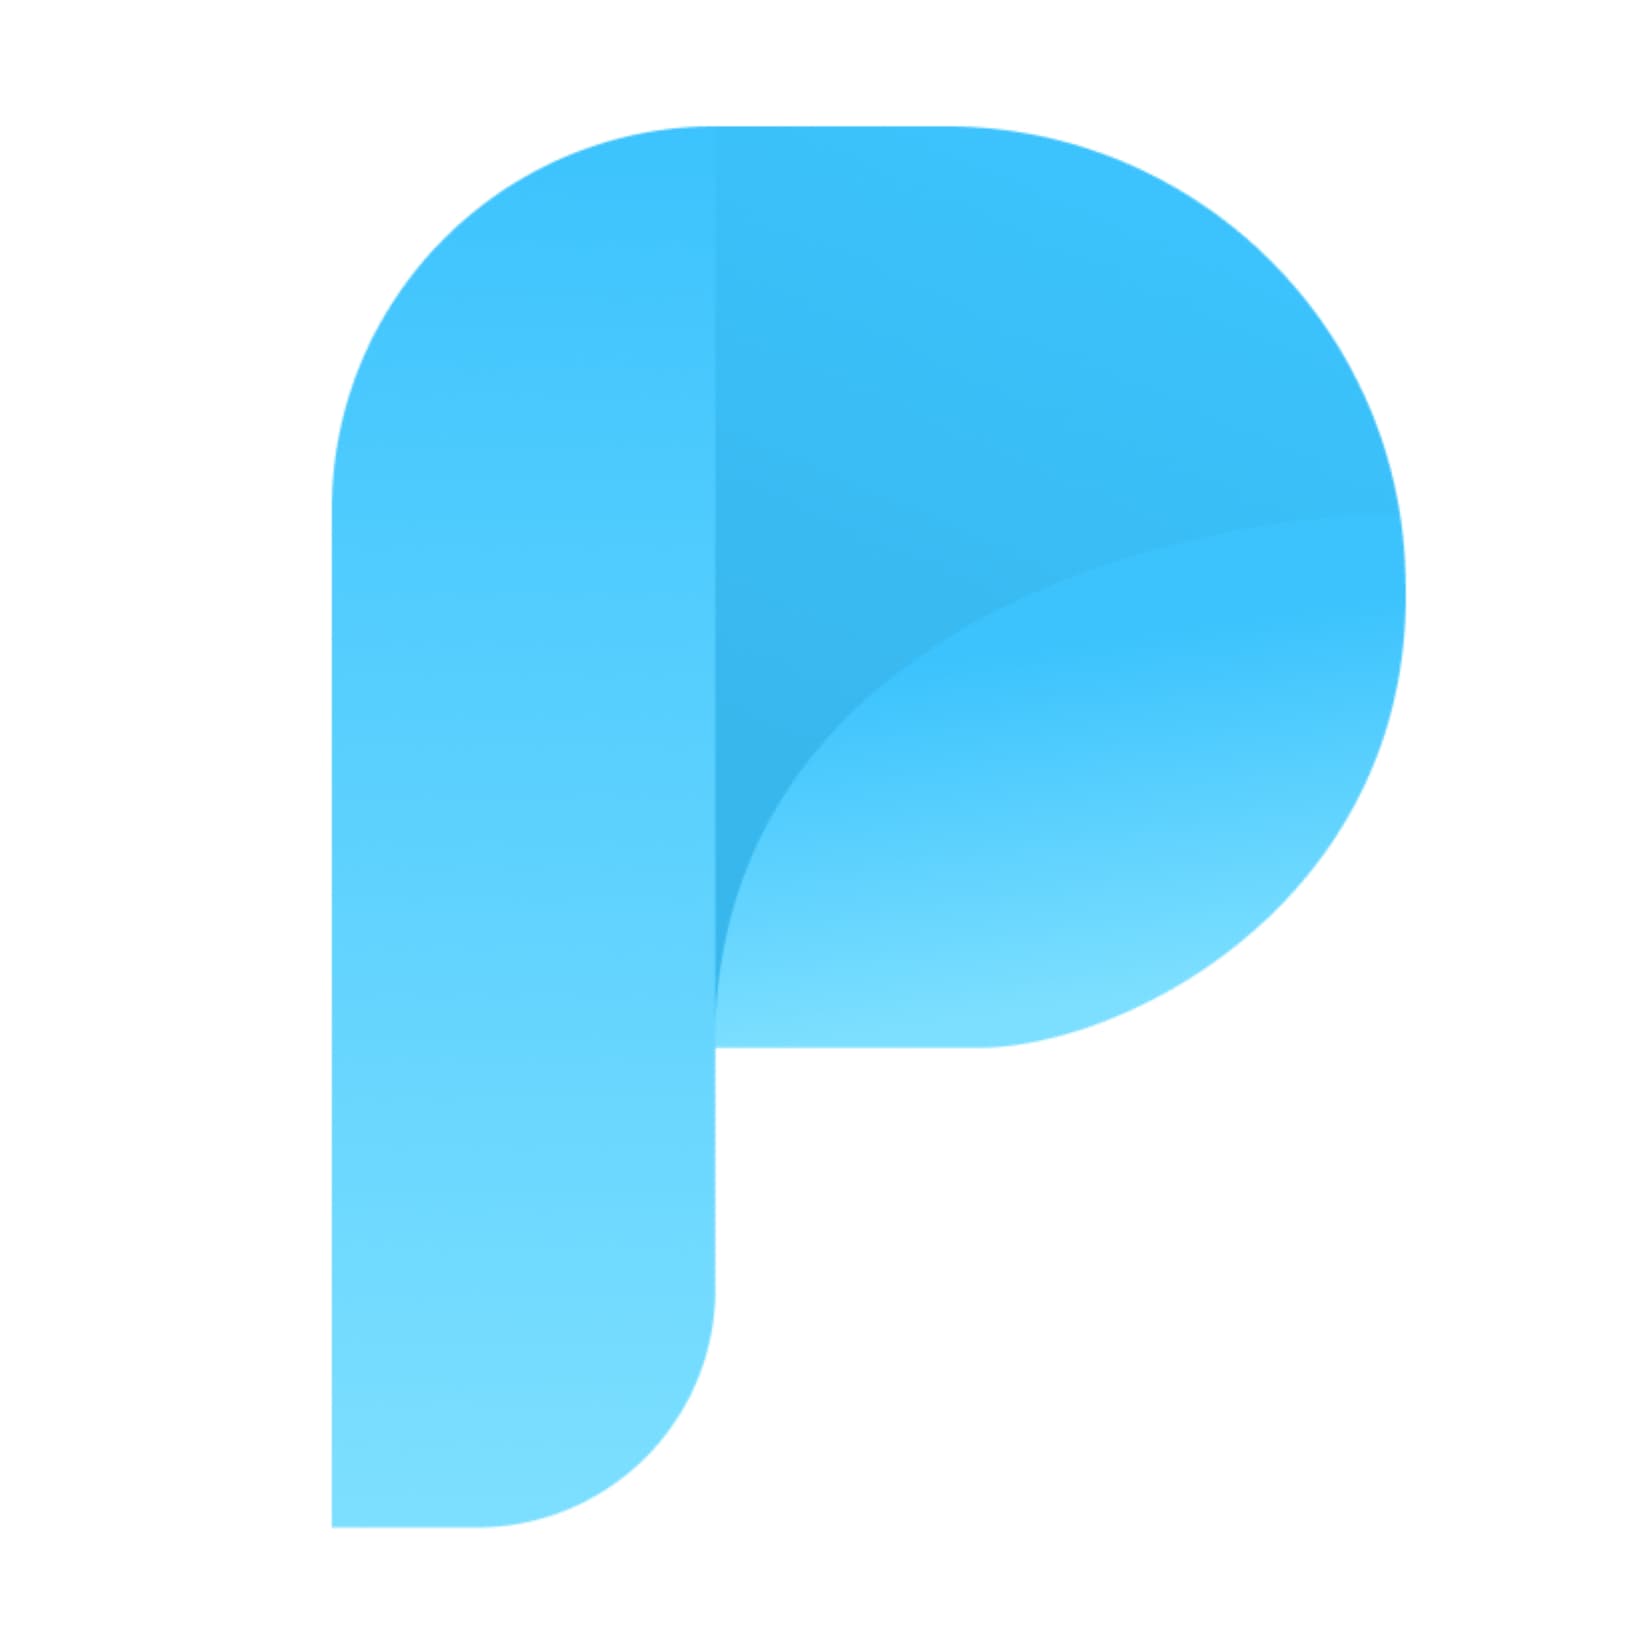 Perdect's logo